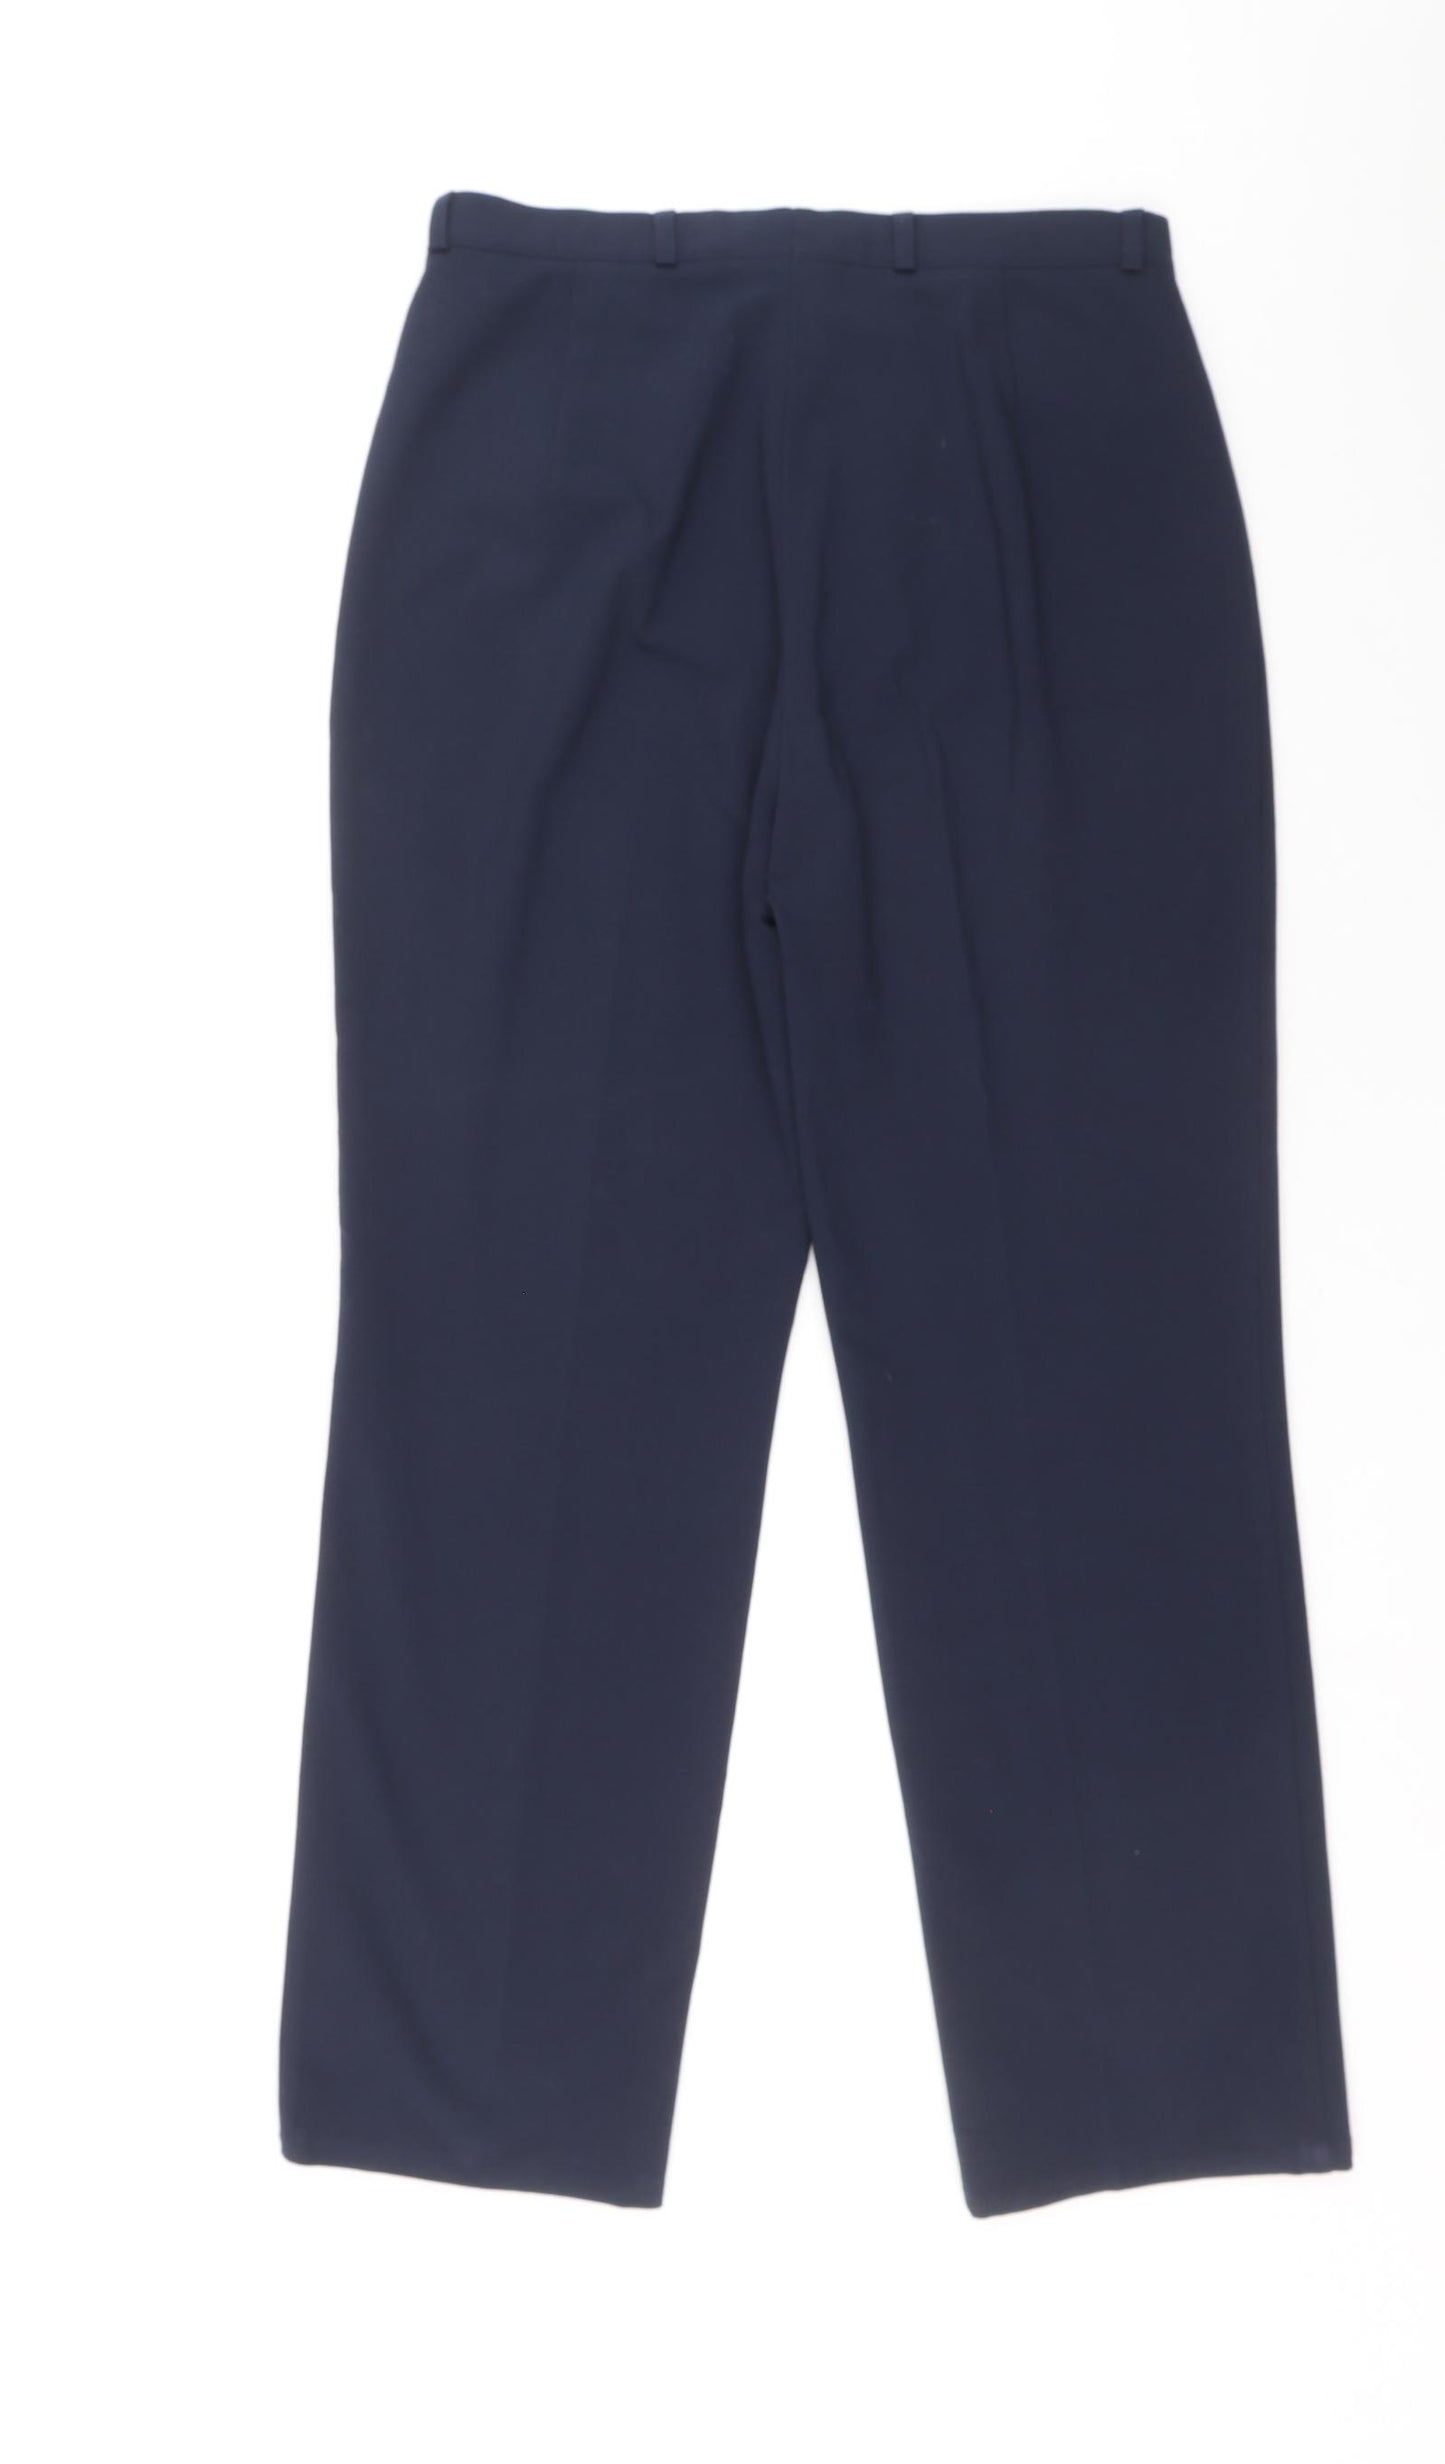 Steilmann Womens Blue Polyester Dress Pants Trousers Size 16 L28 in Regular Zip